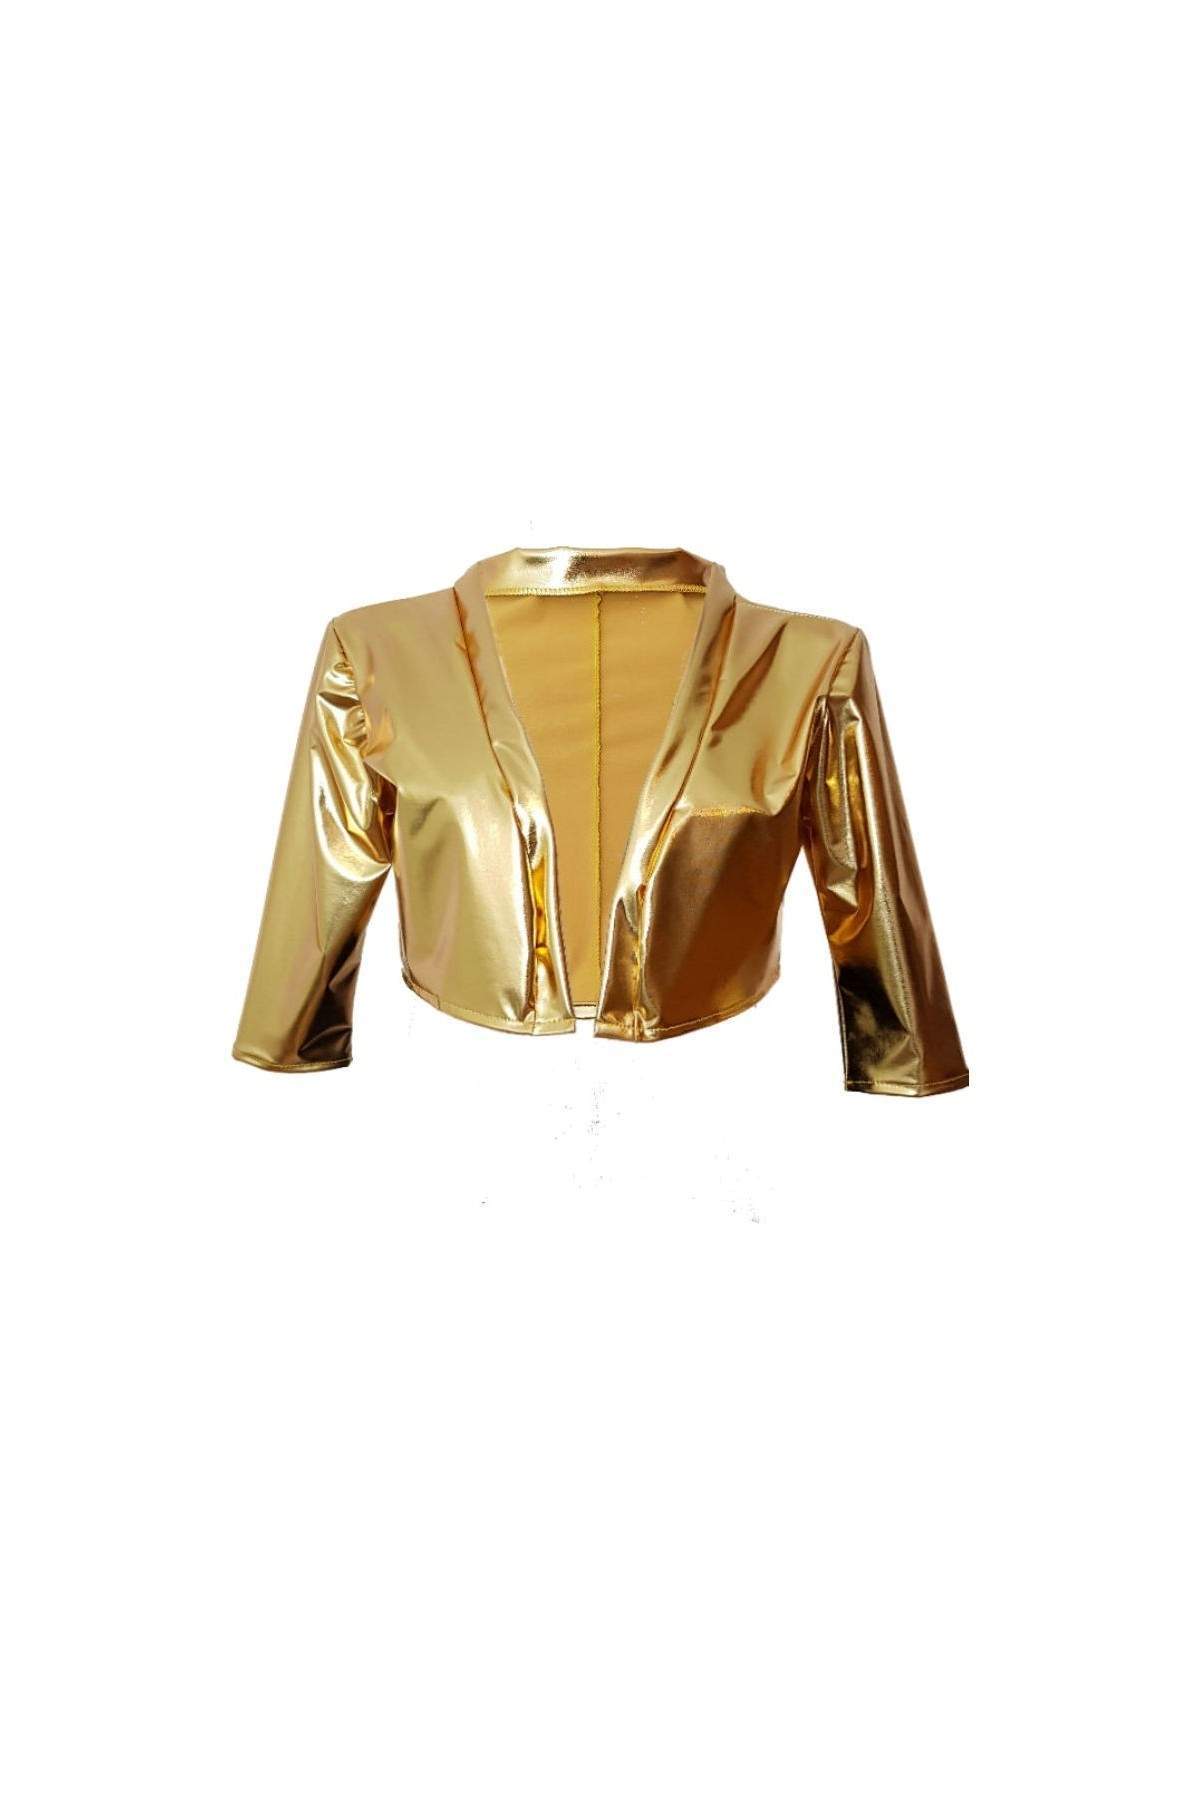 Leather look short jacket gold - Rabatt